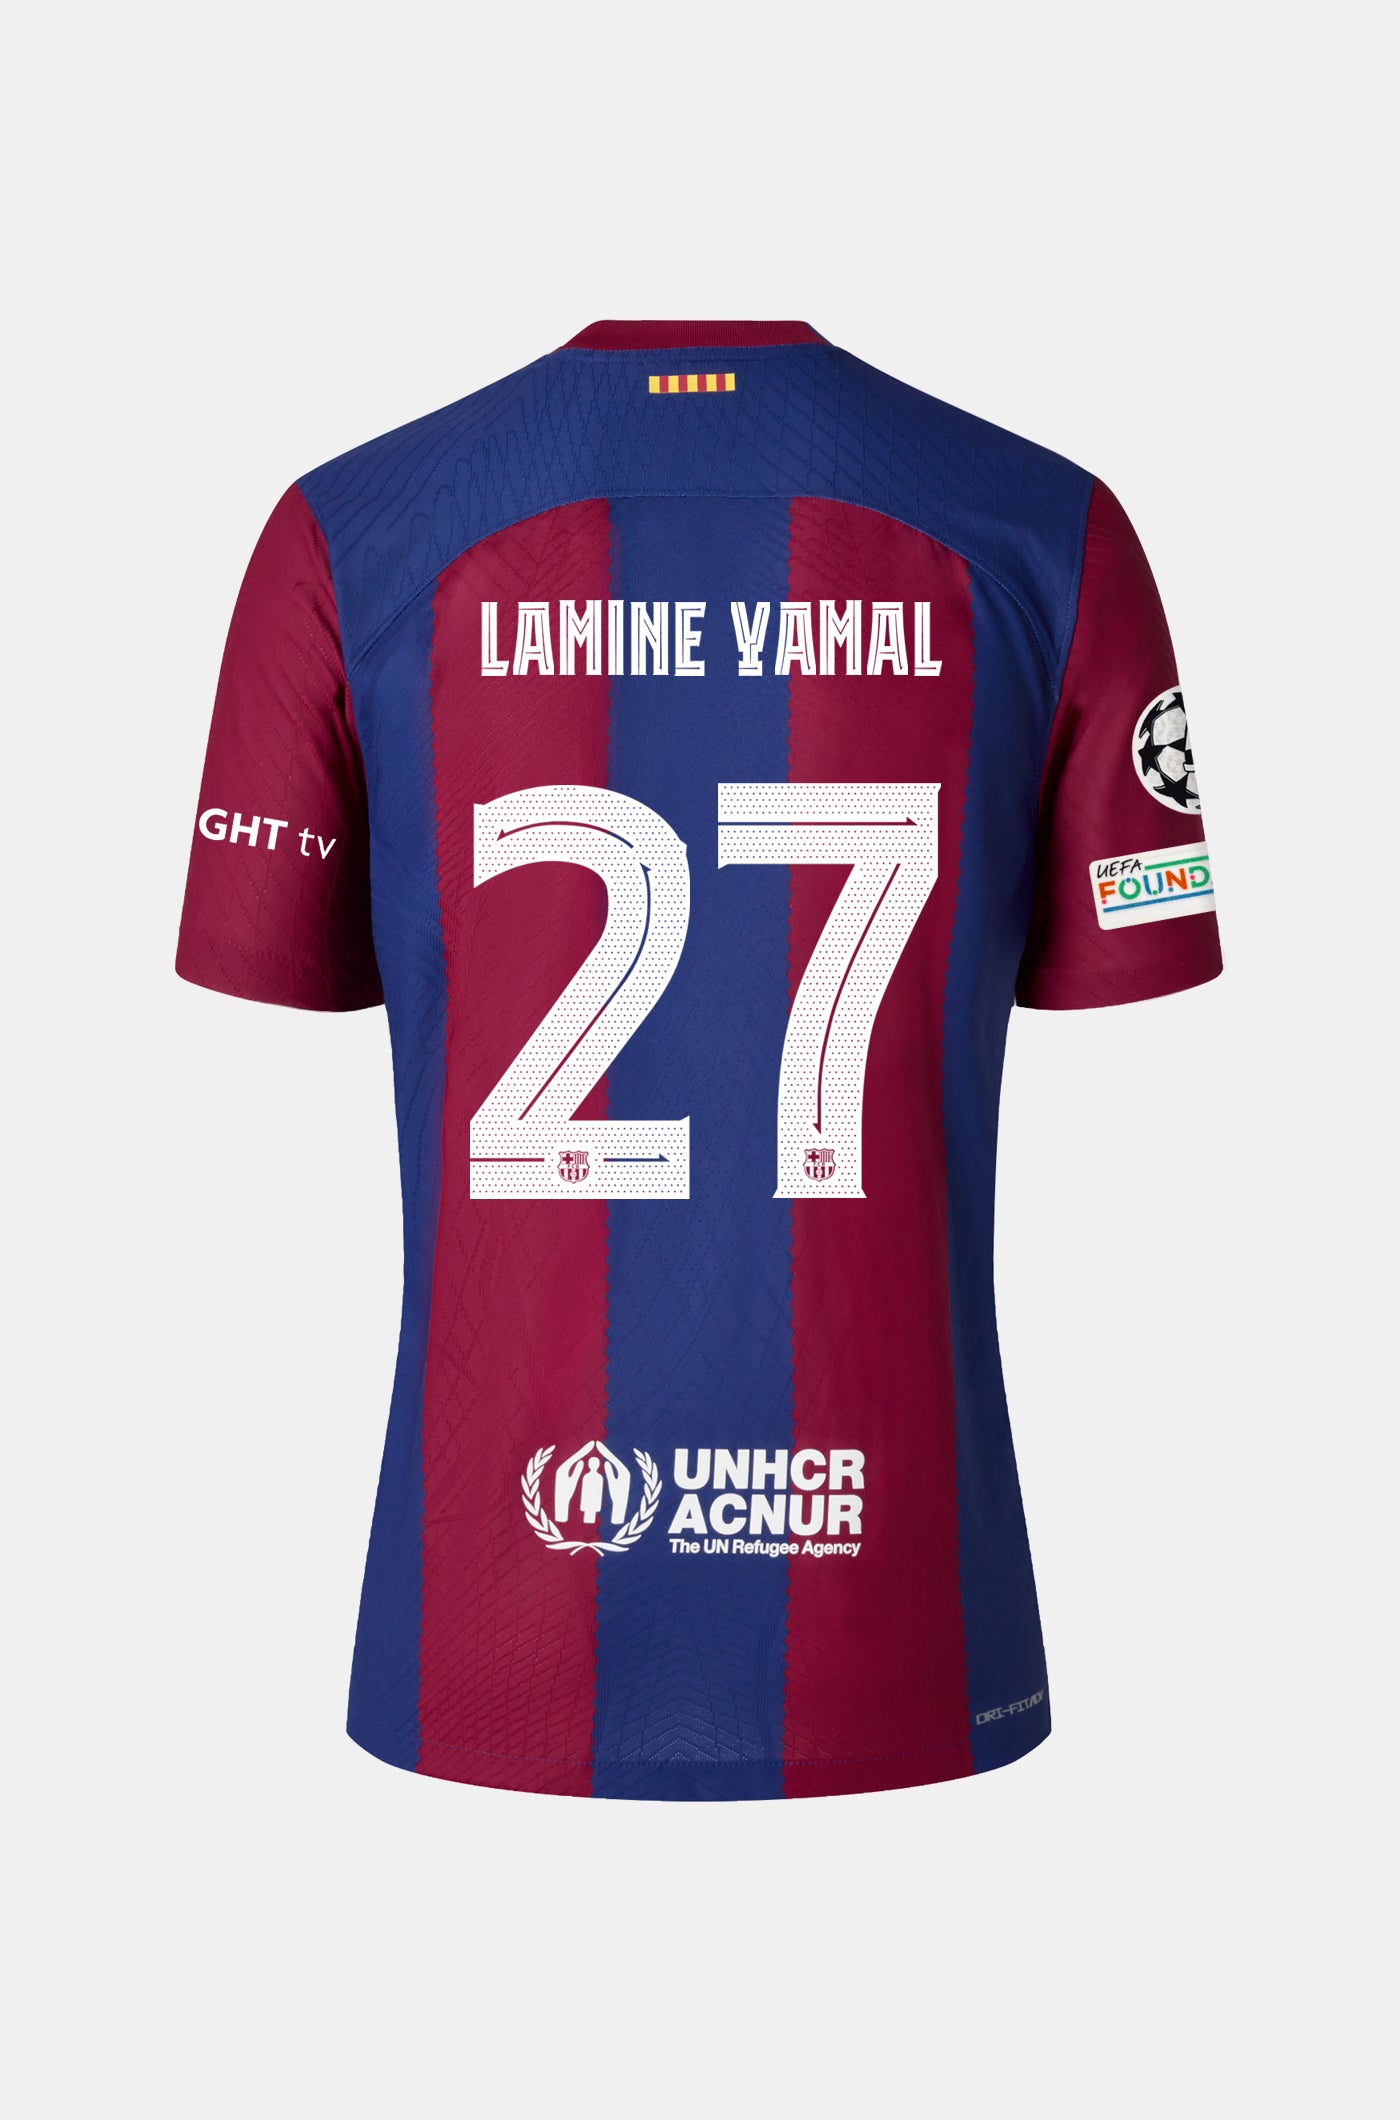 UCL FC Barcelona home shirt 23/24 Player's Edition  - LAMINE YAMAL